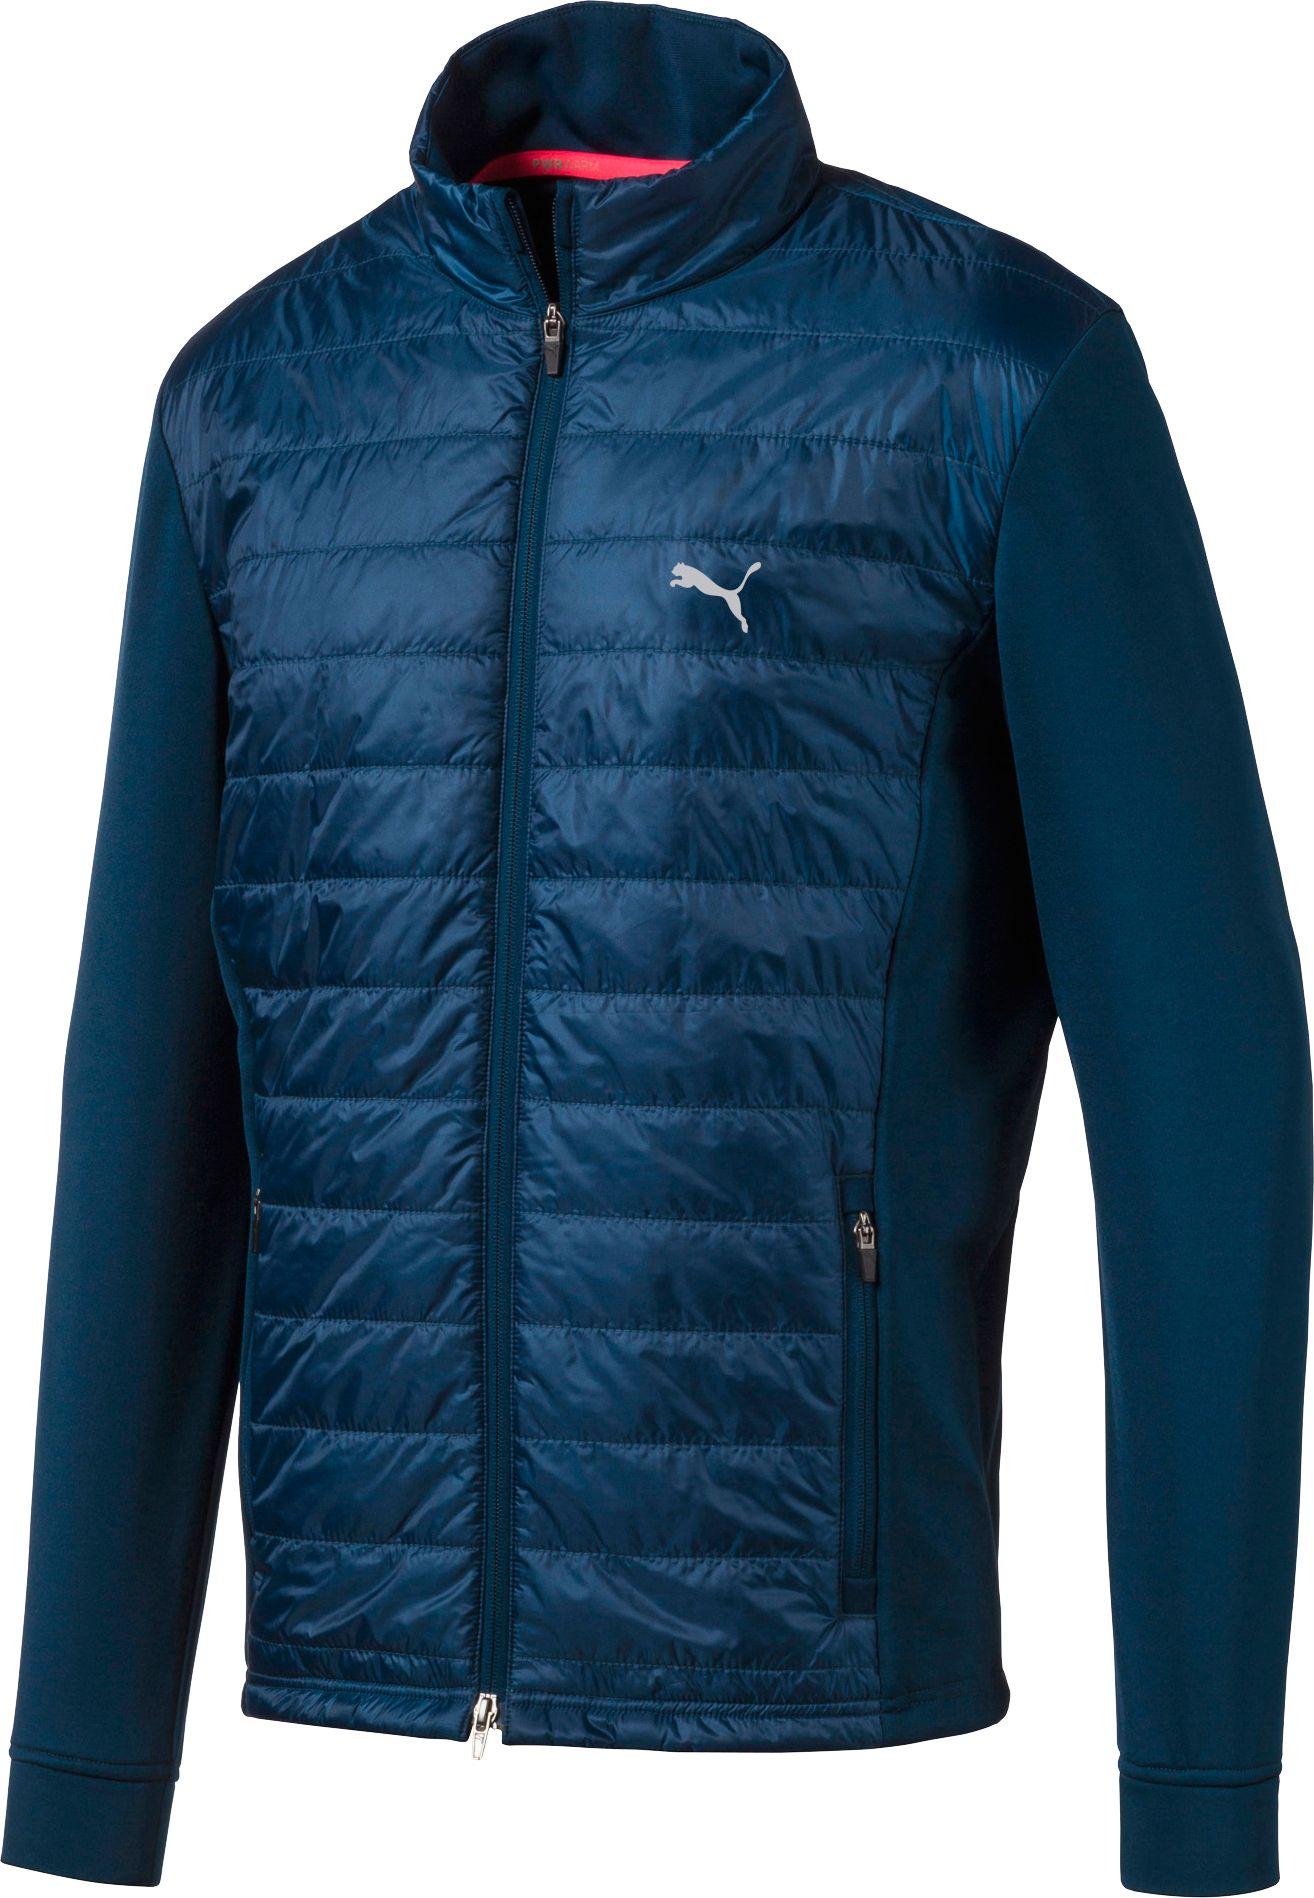 PUMA Primaloft Golf Jacket in Blue for Men - Lyst